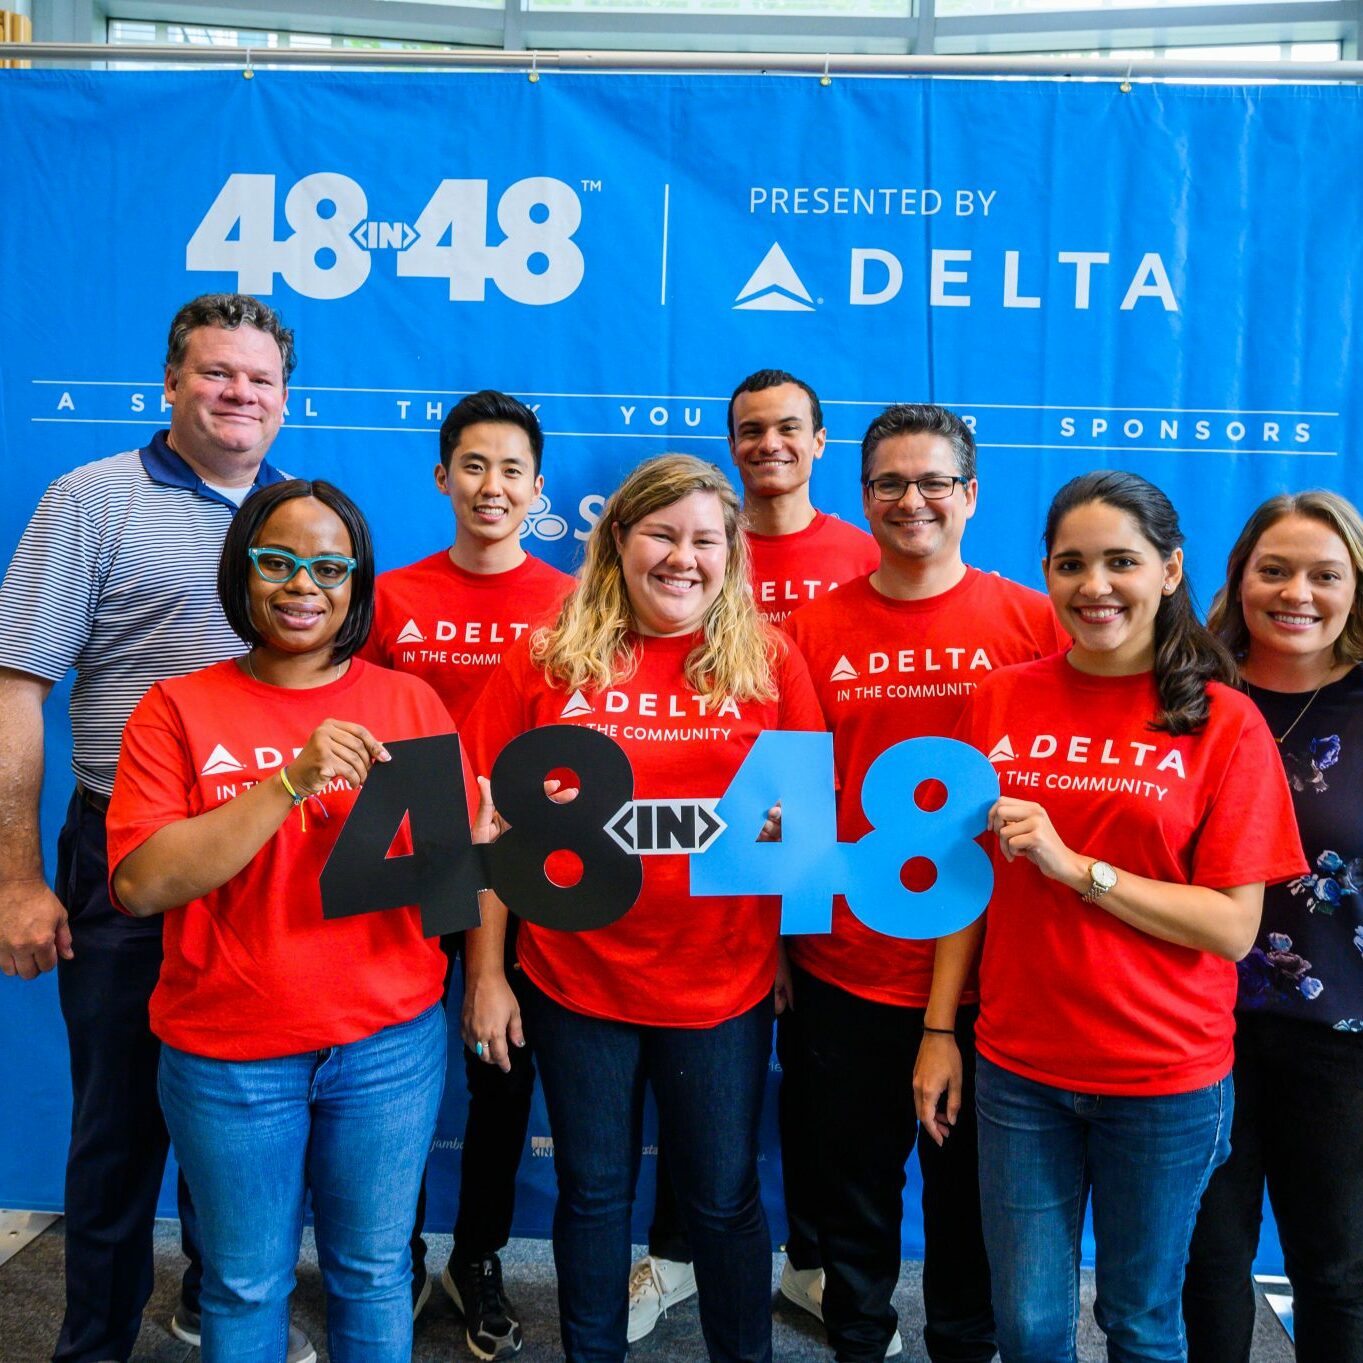 Delta volunteers participate in the 48in48 ATL judging session in Atlanta, Ga. on Sunday, October 6, 2019. (Photo by John Paul Van Wert for Rank Studios)